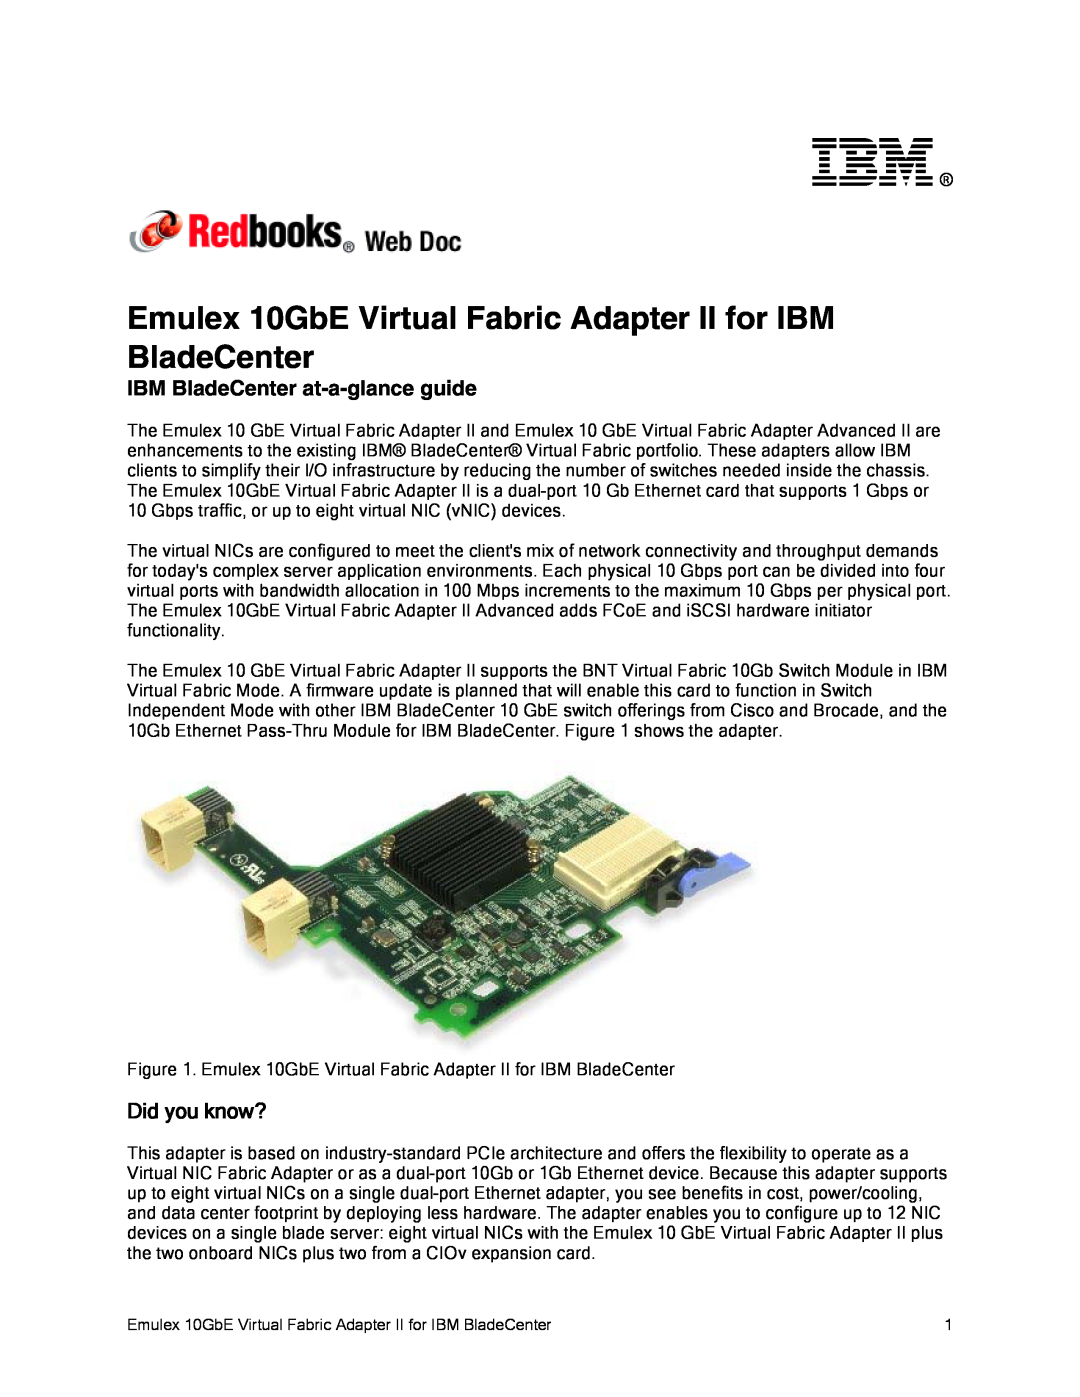 IBM 10GBE manual Emulex 10GbE Virtual Fabric Adapter II for IBM BladeCenter, Did you know? 